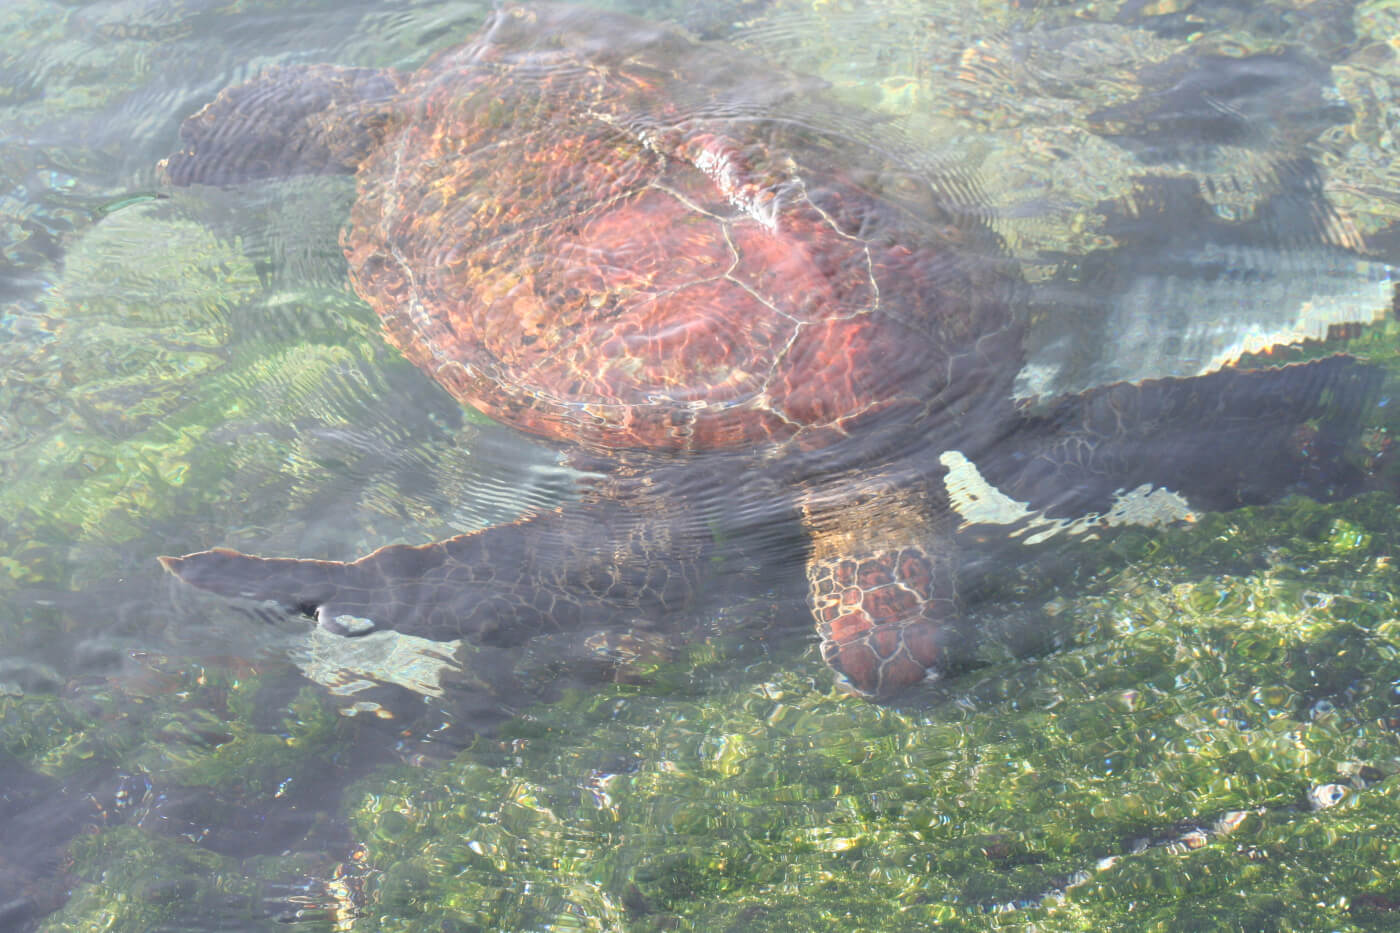 Chelonia mydas agassisi (Galapagos Green Turtle), Fernandina Island, Galapagos. Photo: Andreas Kelager, CDF.